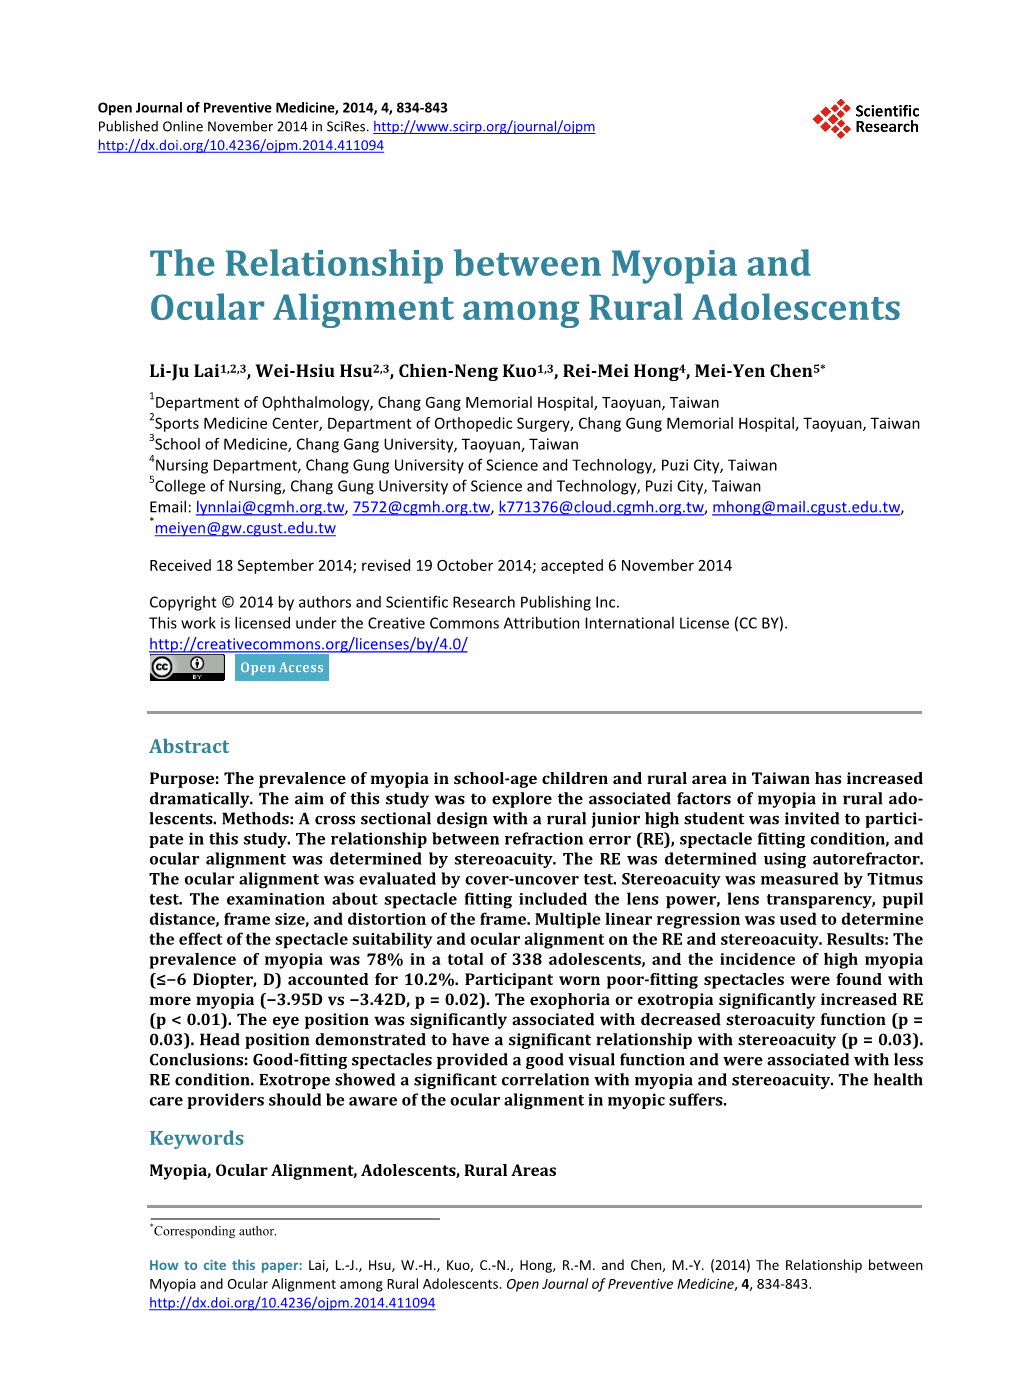 The Relationship Between Myopia and Ocular Alignment Among Rural Adolescents